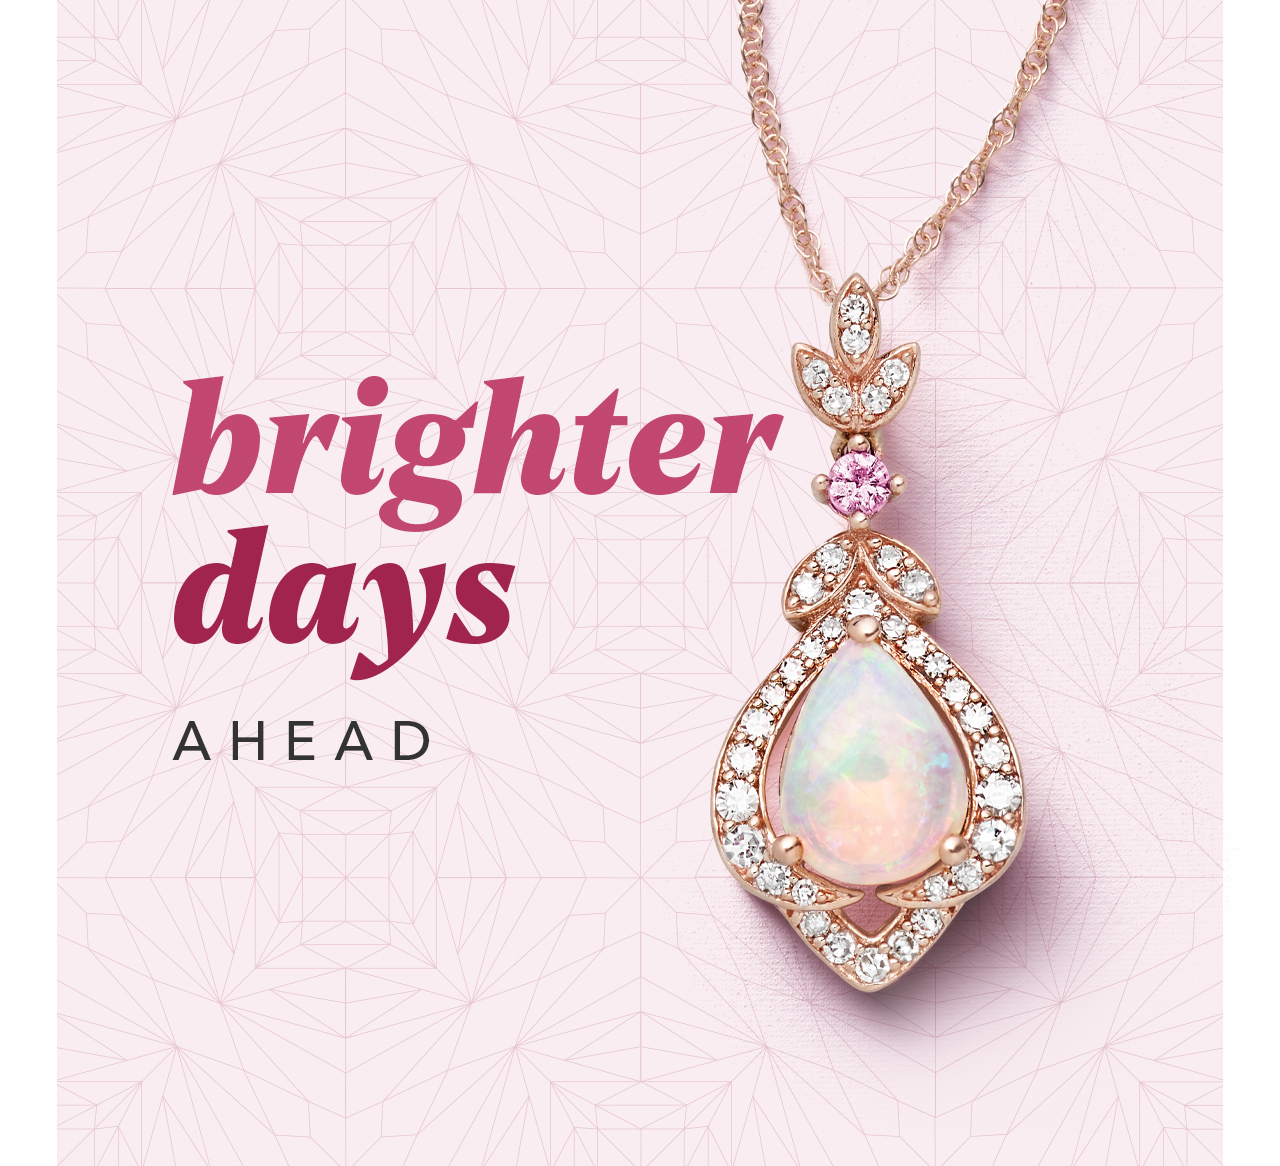 Brighter Days Ahead - Spring Gemstones